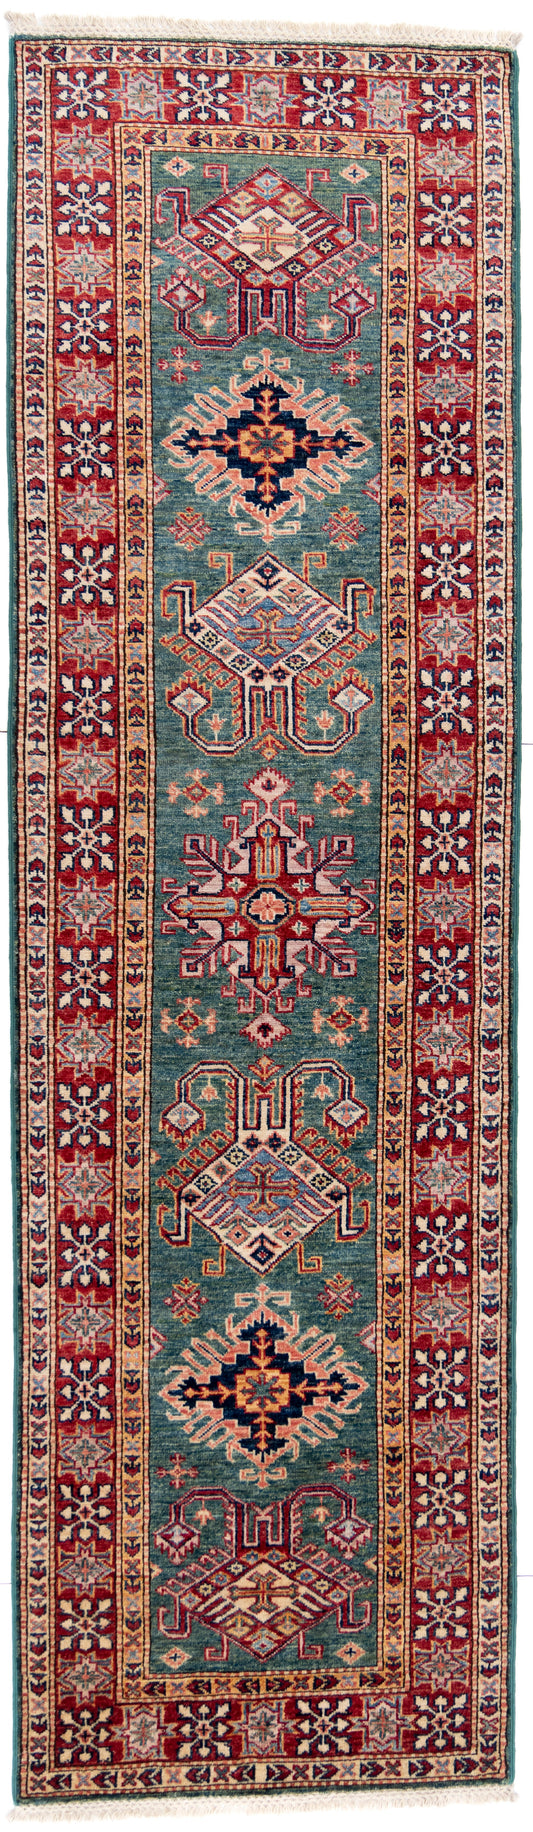 Green Kazak Runner Carpet with Cream & Red Borders